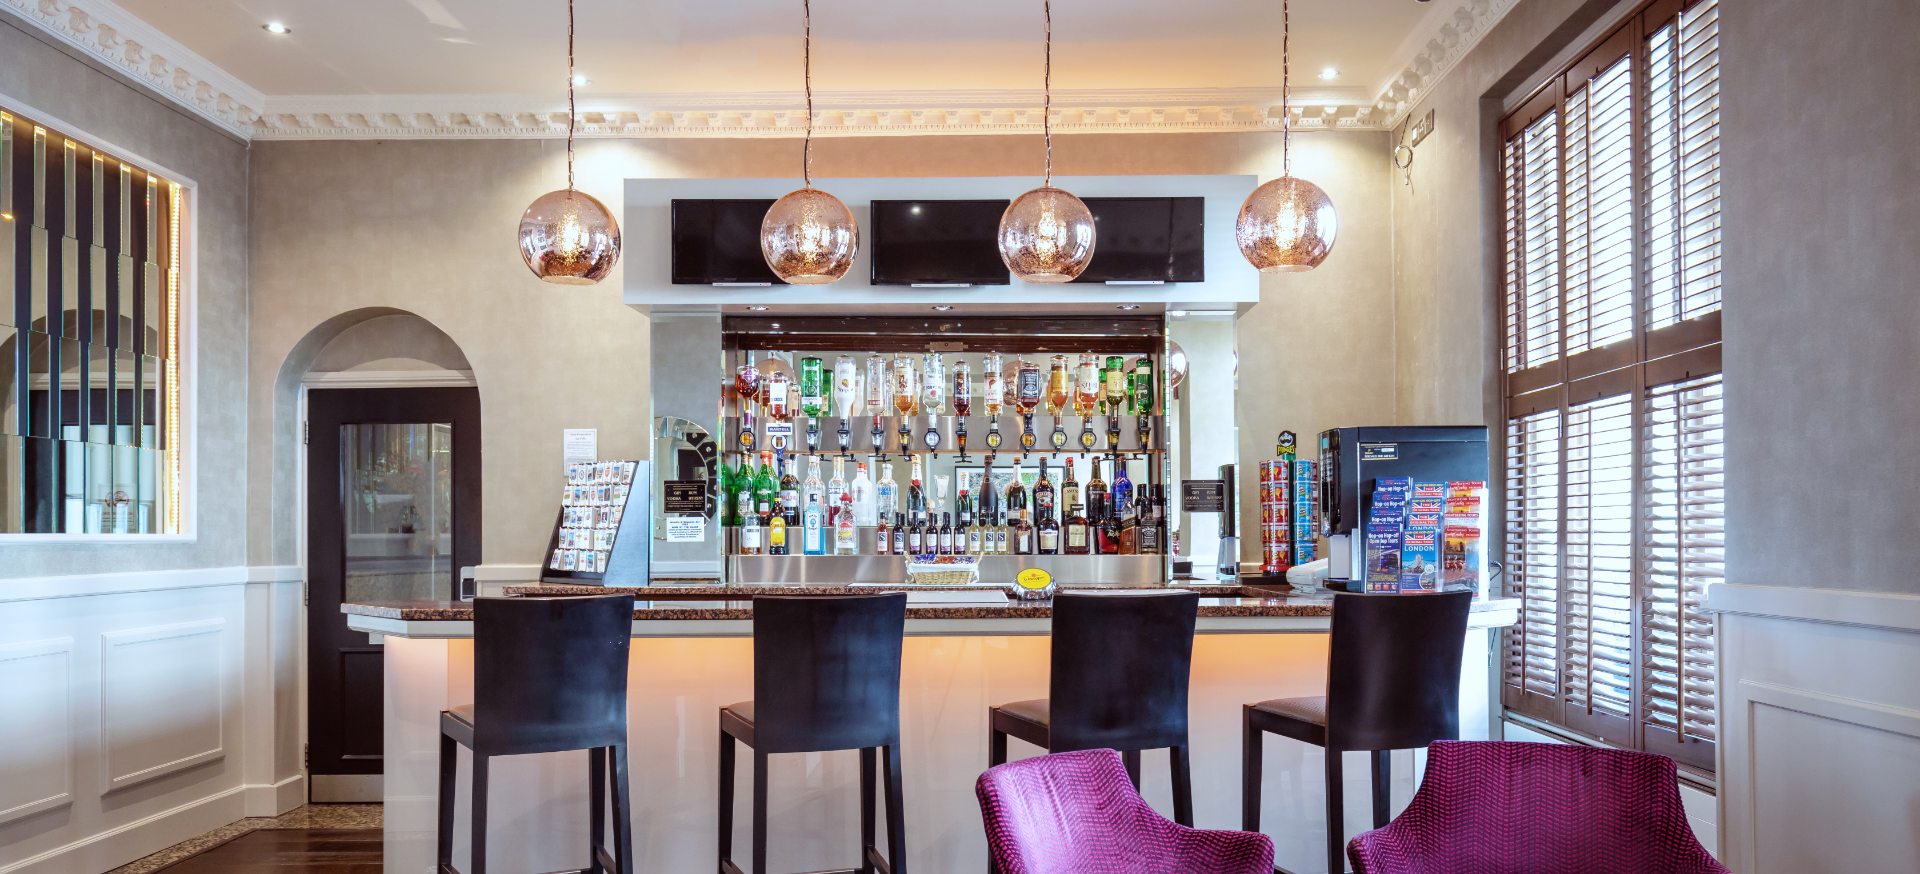 Best Hotel Bars in London Victoria